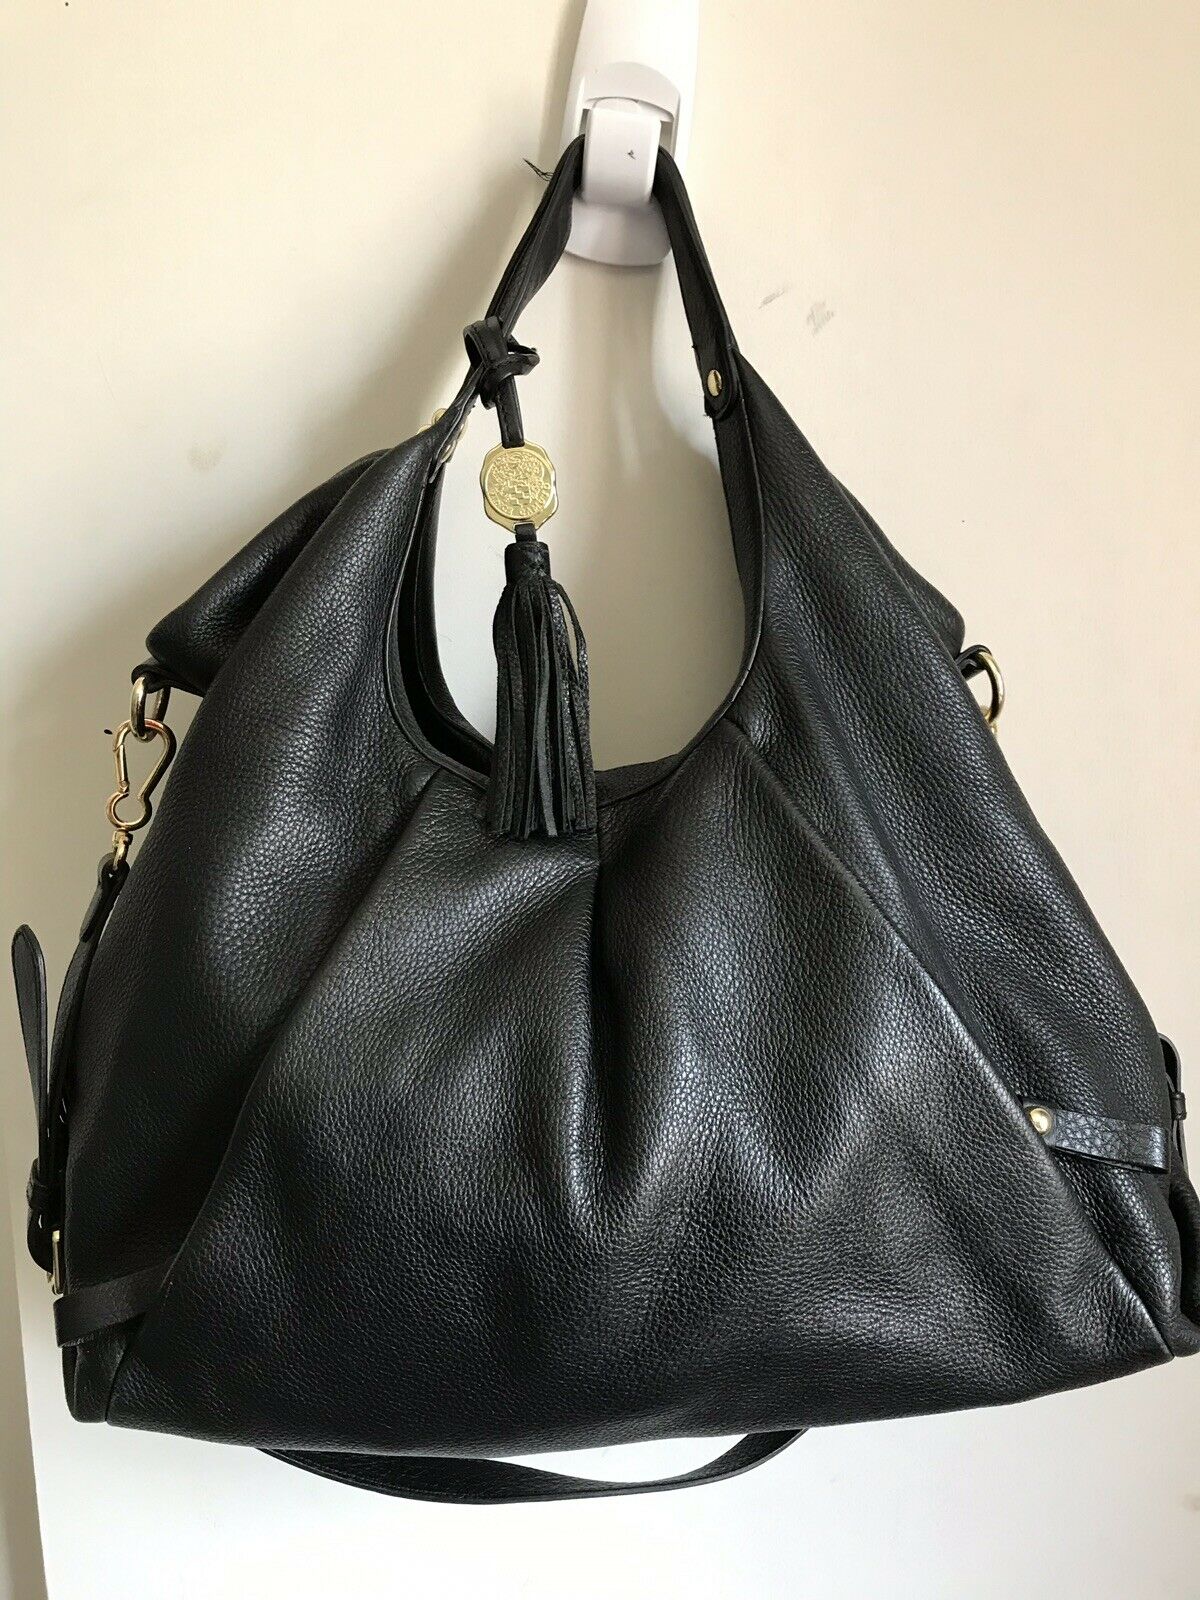 Vince Camuto Medium Black Leather Hobo Bag